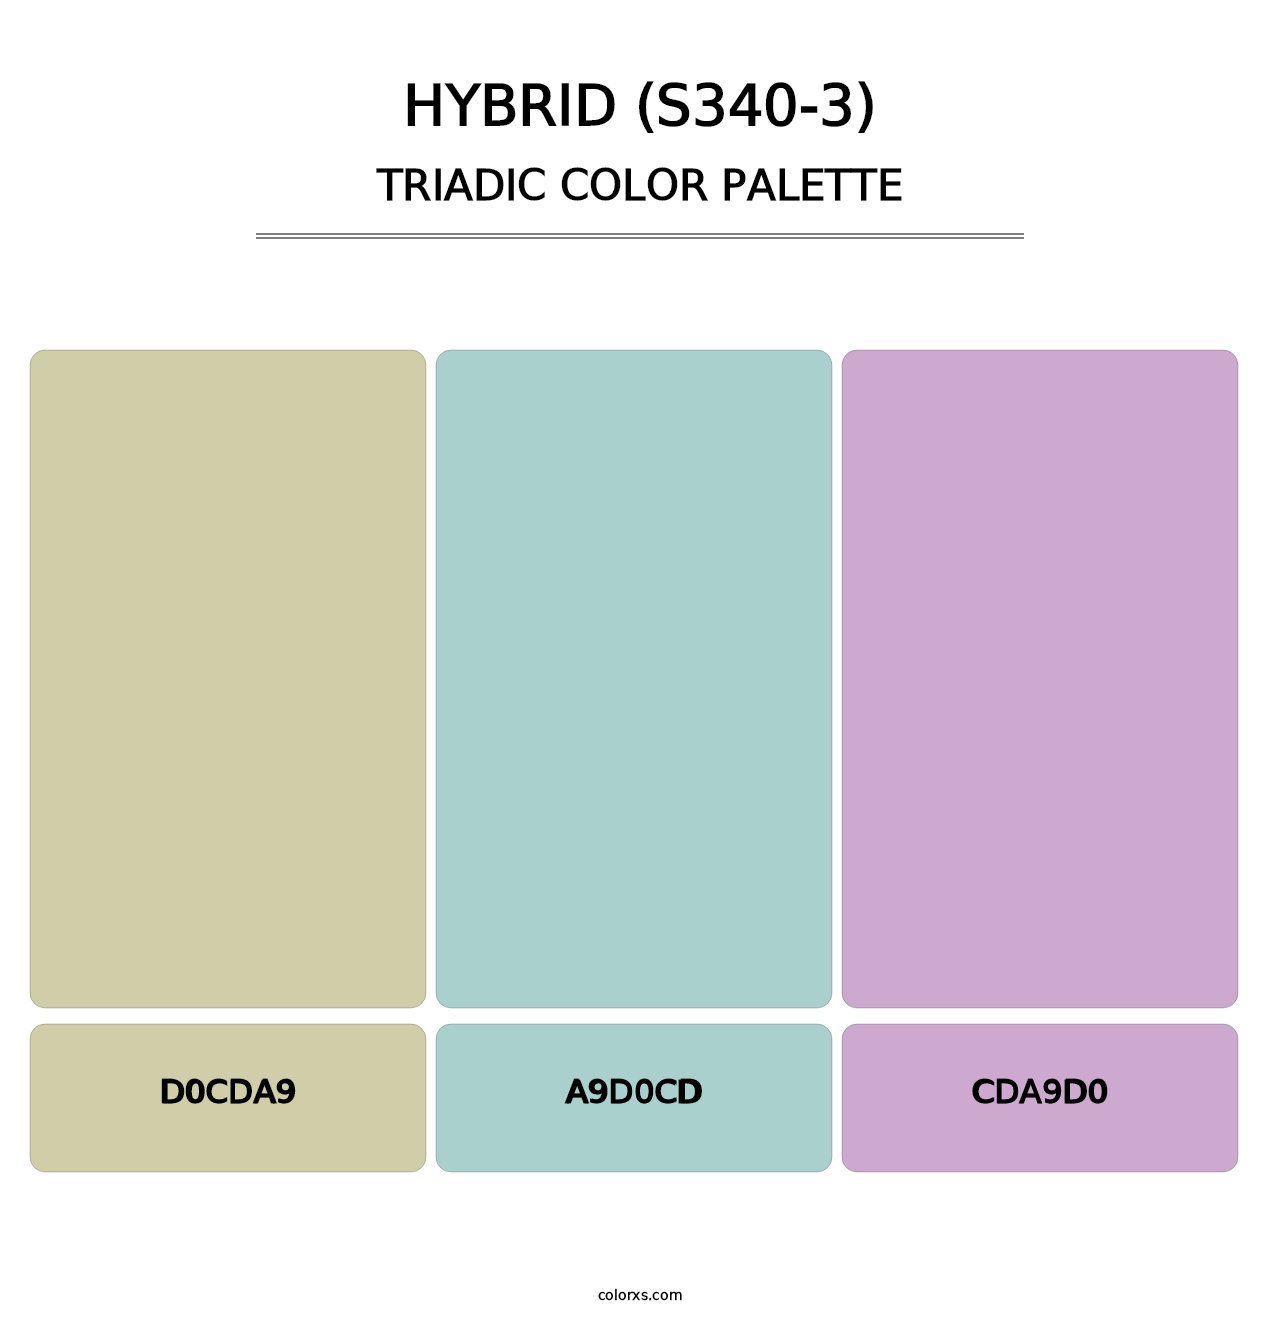 Hybrid (S340-3) - Triadic Color Palette